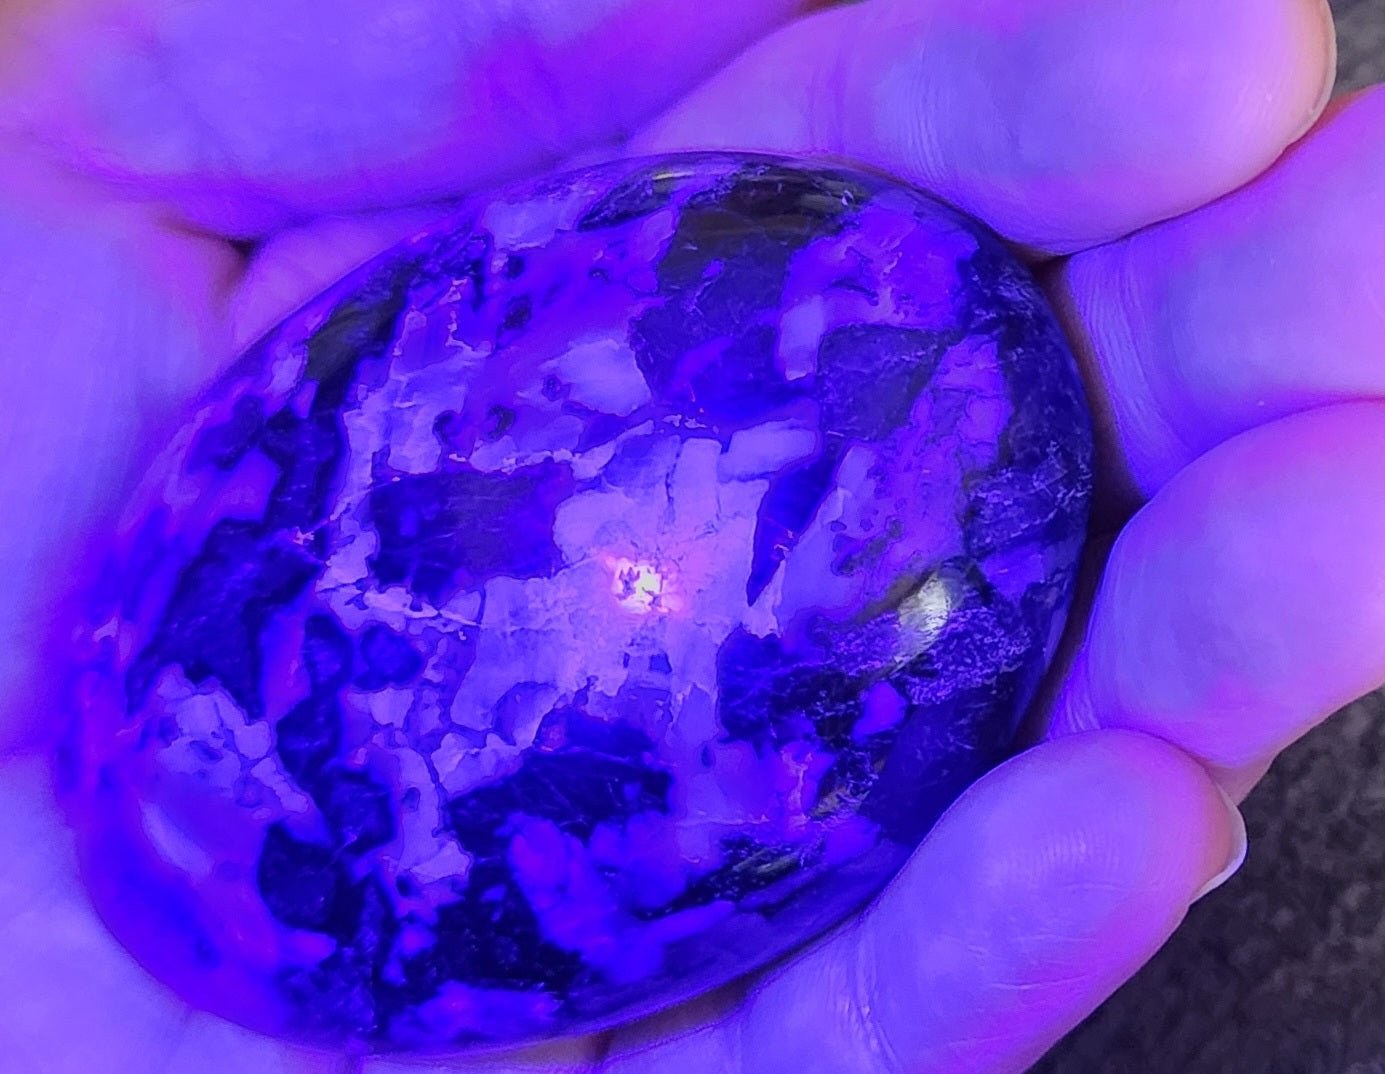 Indigo Gabbro (Indigo Merlinite) Palm Stone - Beautiful Blue Stones!